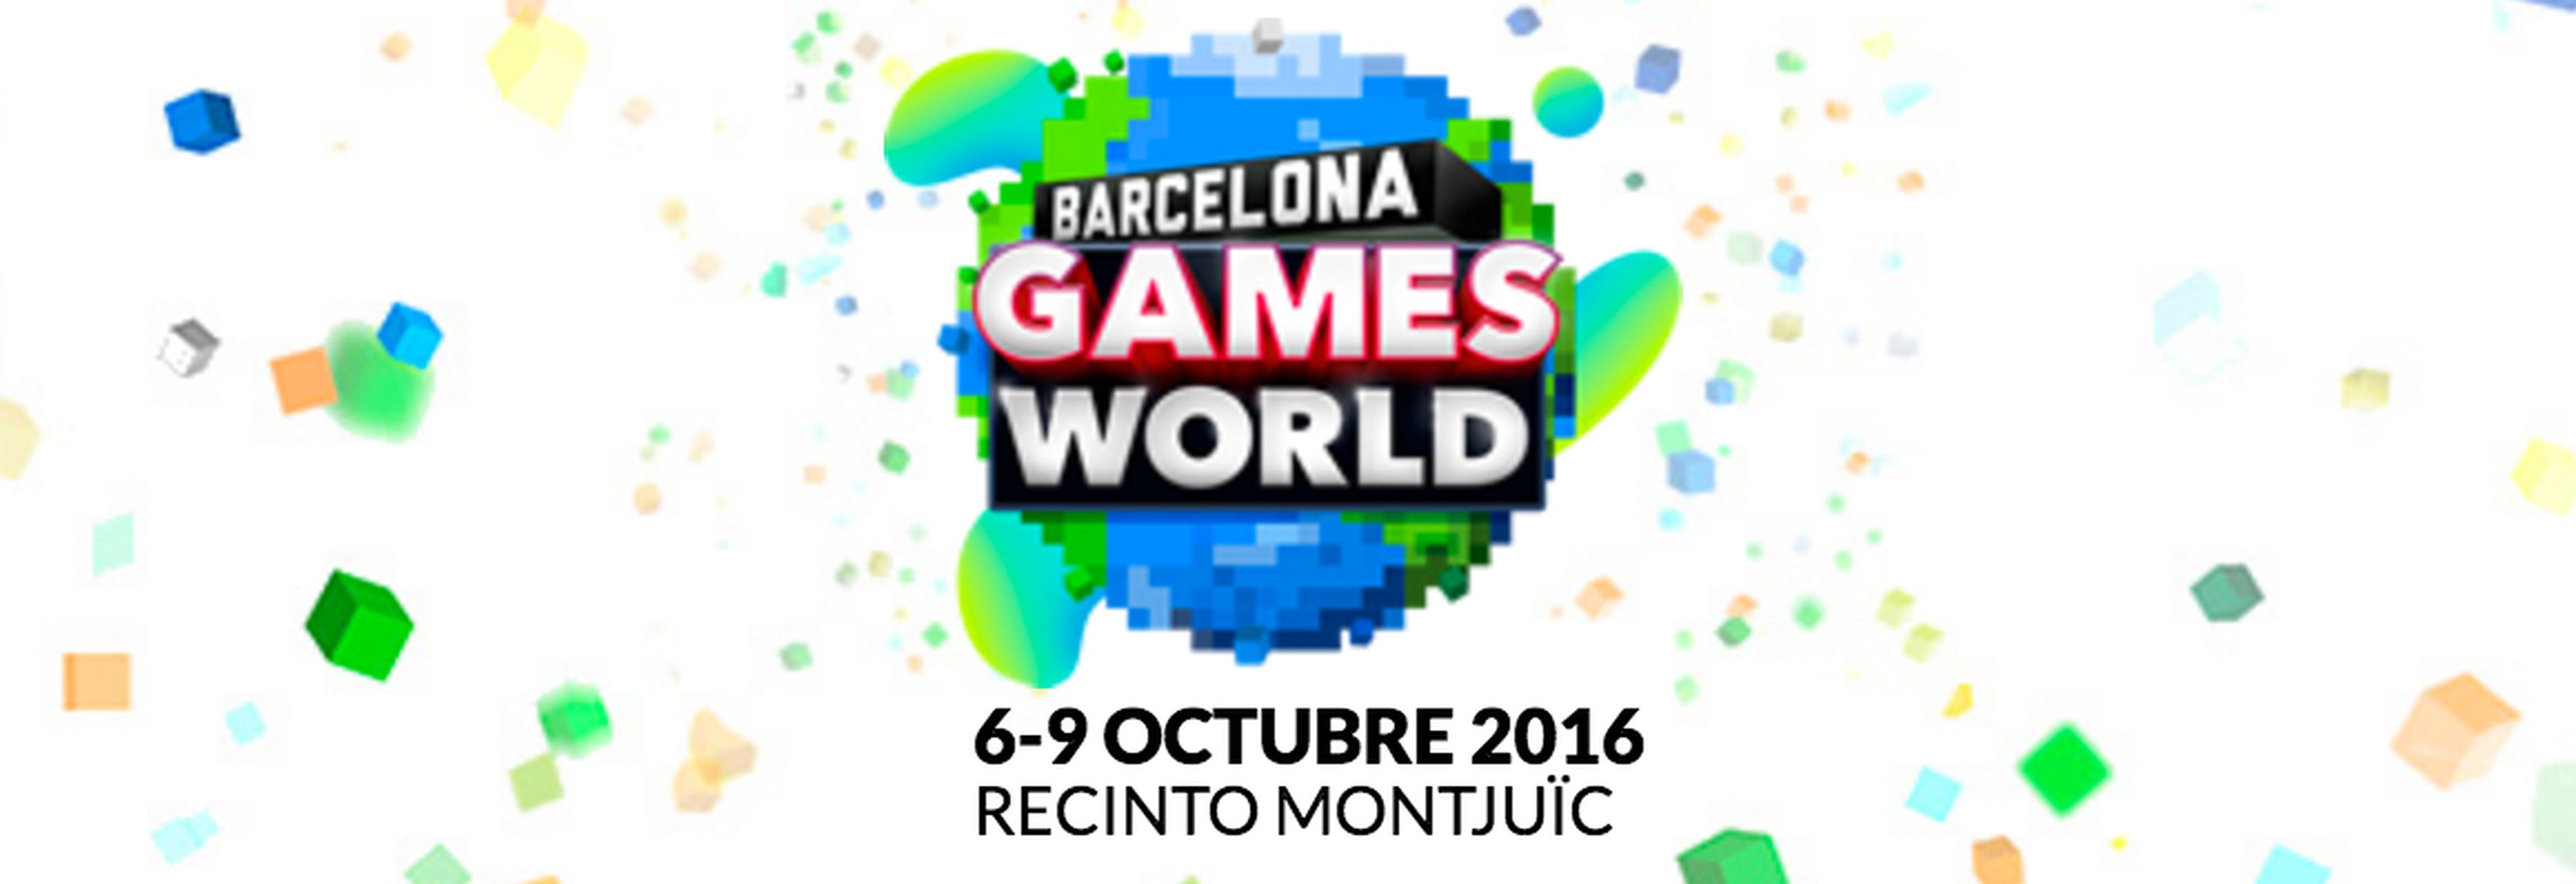 Barcelona Games World